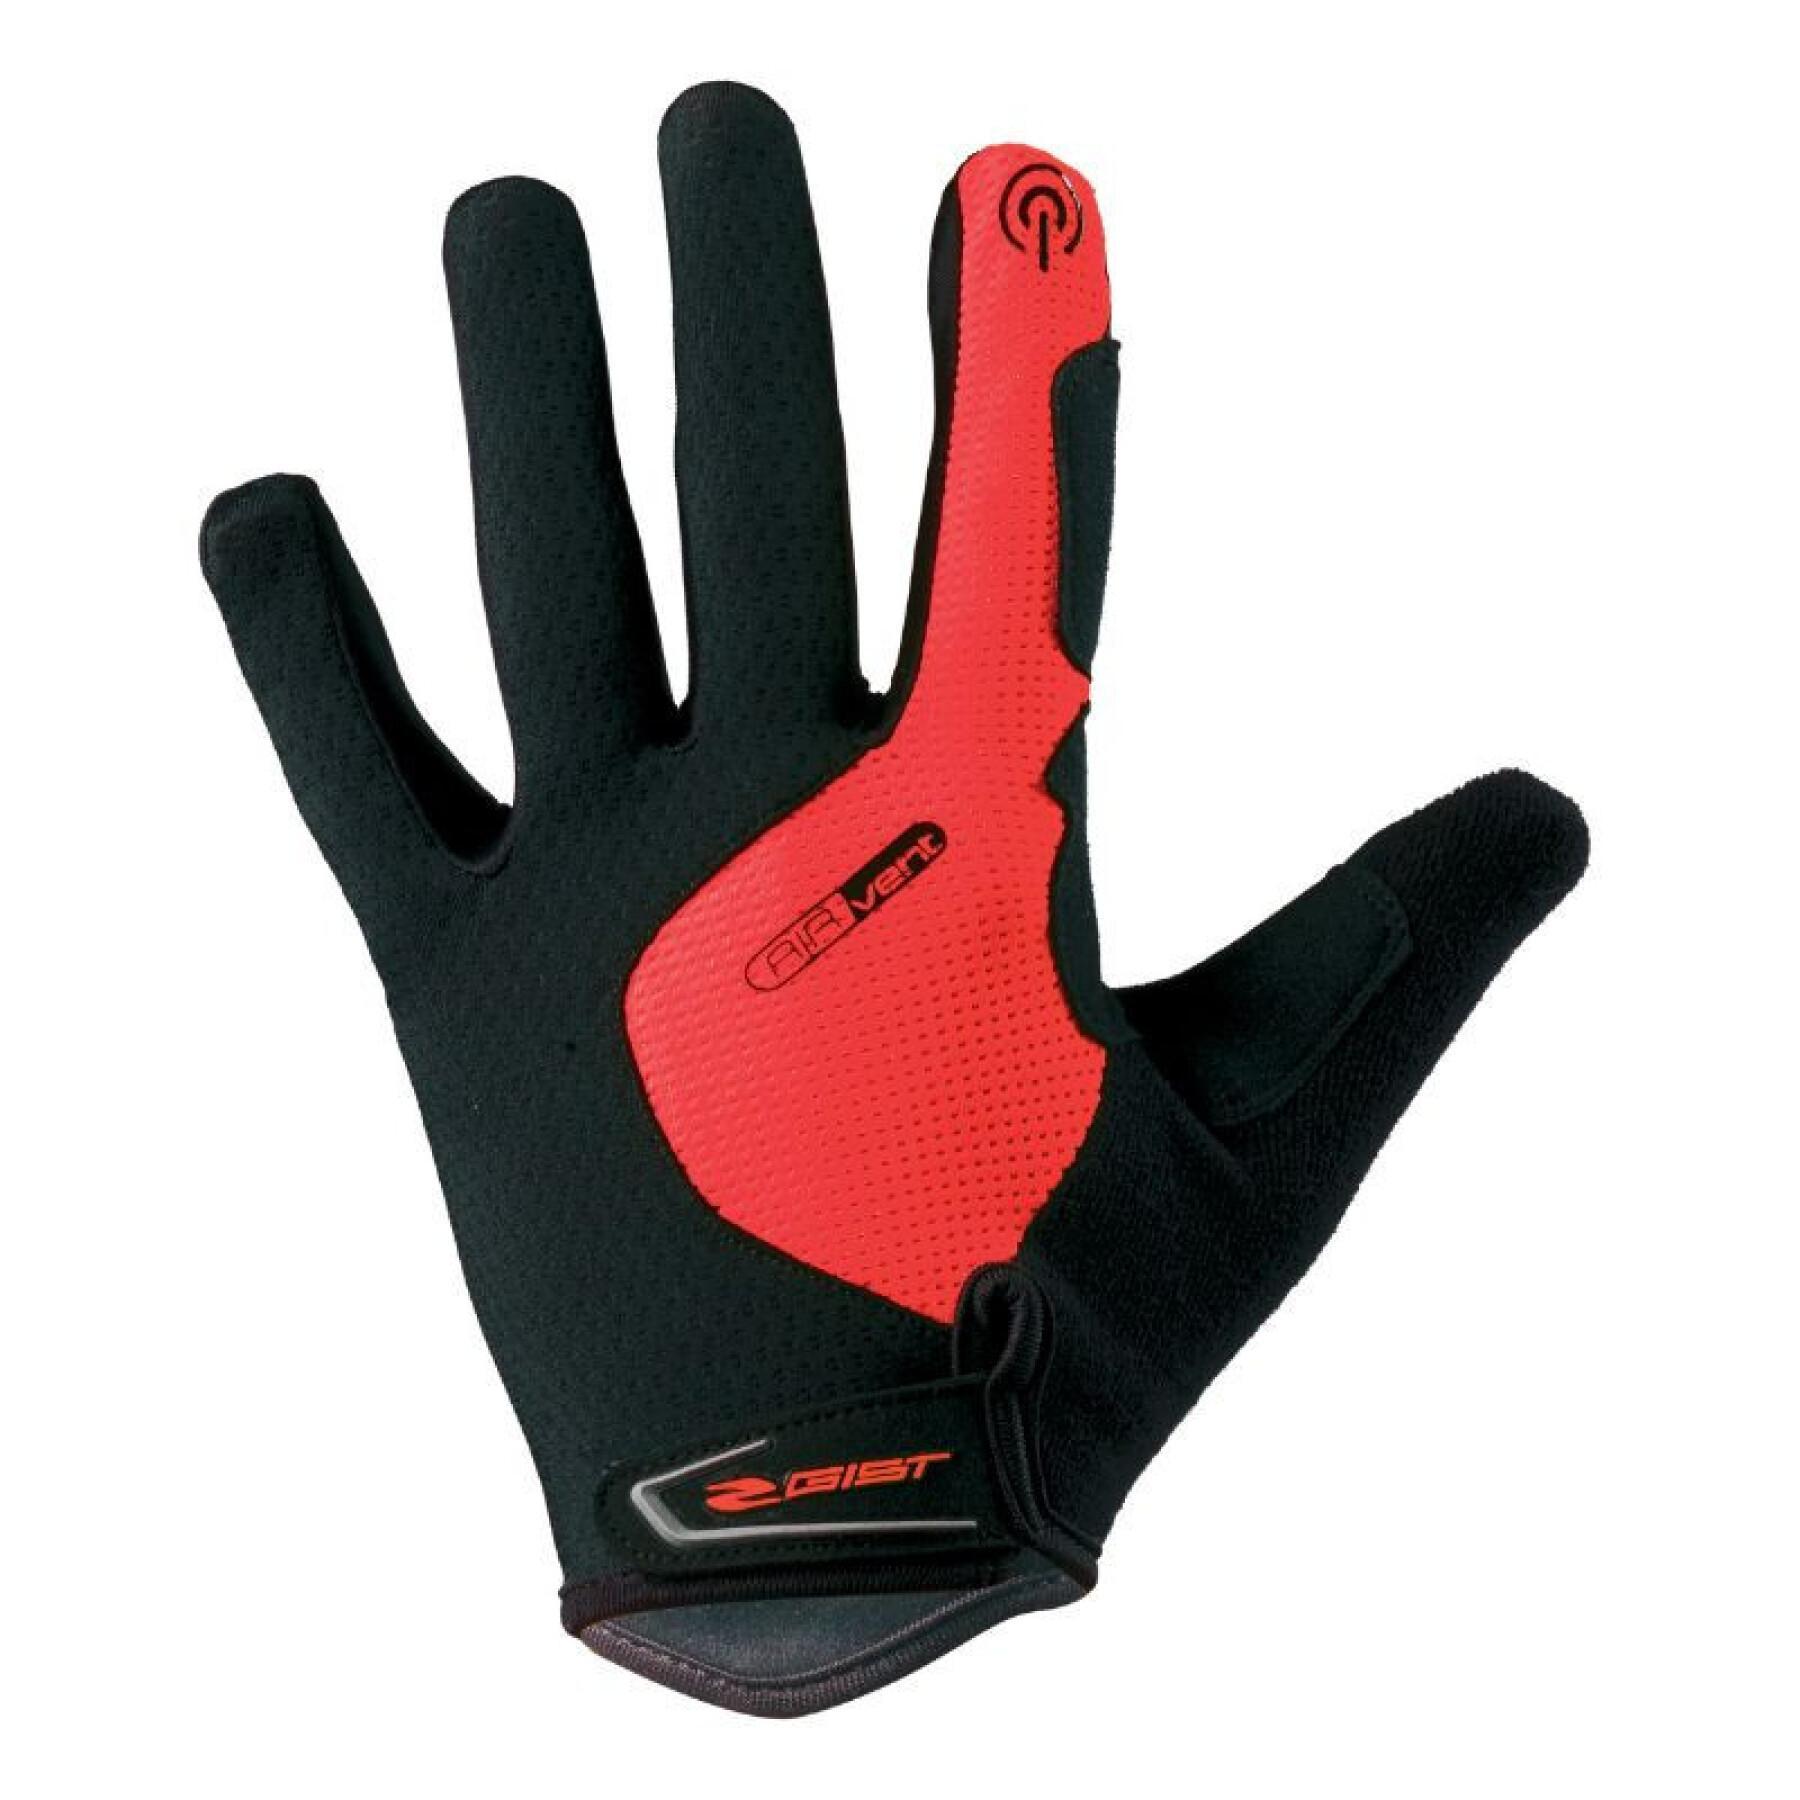 Lange Handschuhe gist hero gel compatible ecran tactile -5532 Gist GIST Hero(paire sur carte)